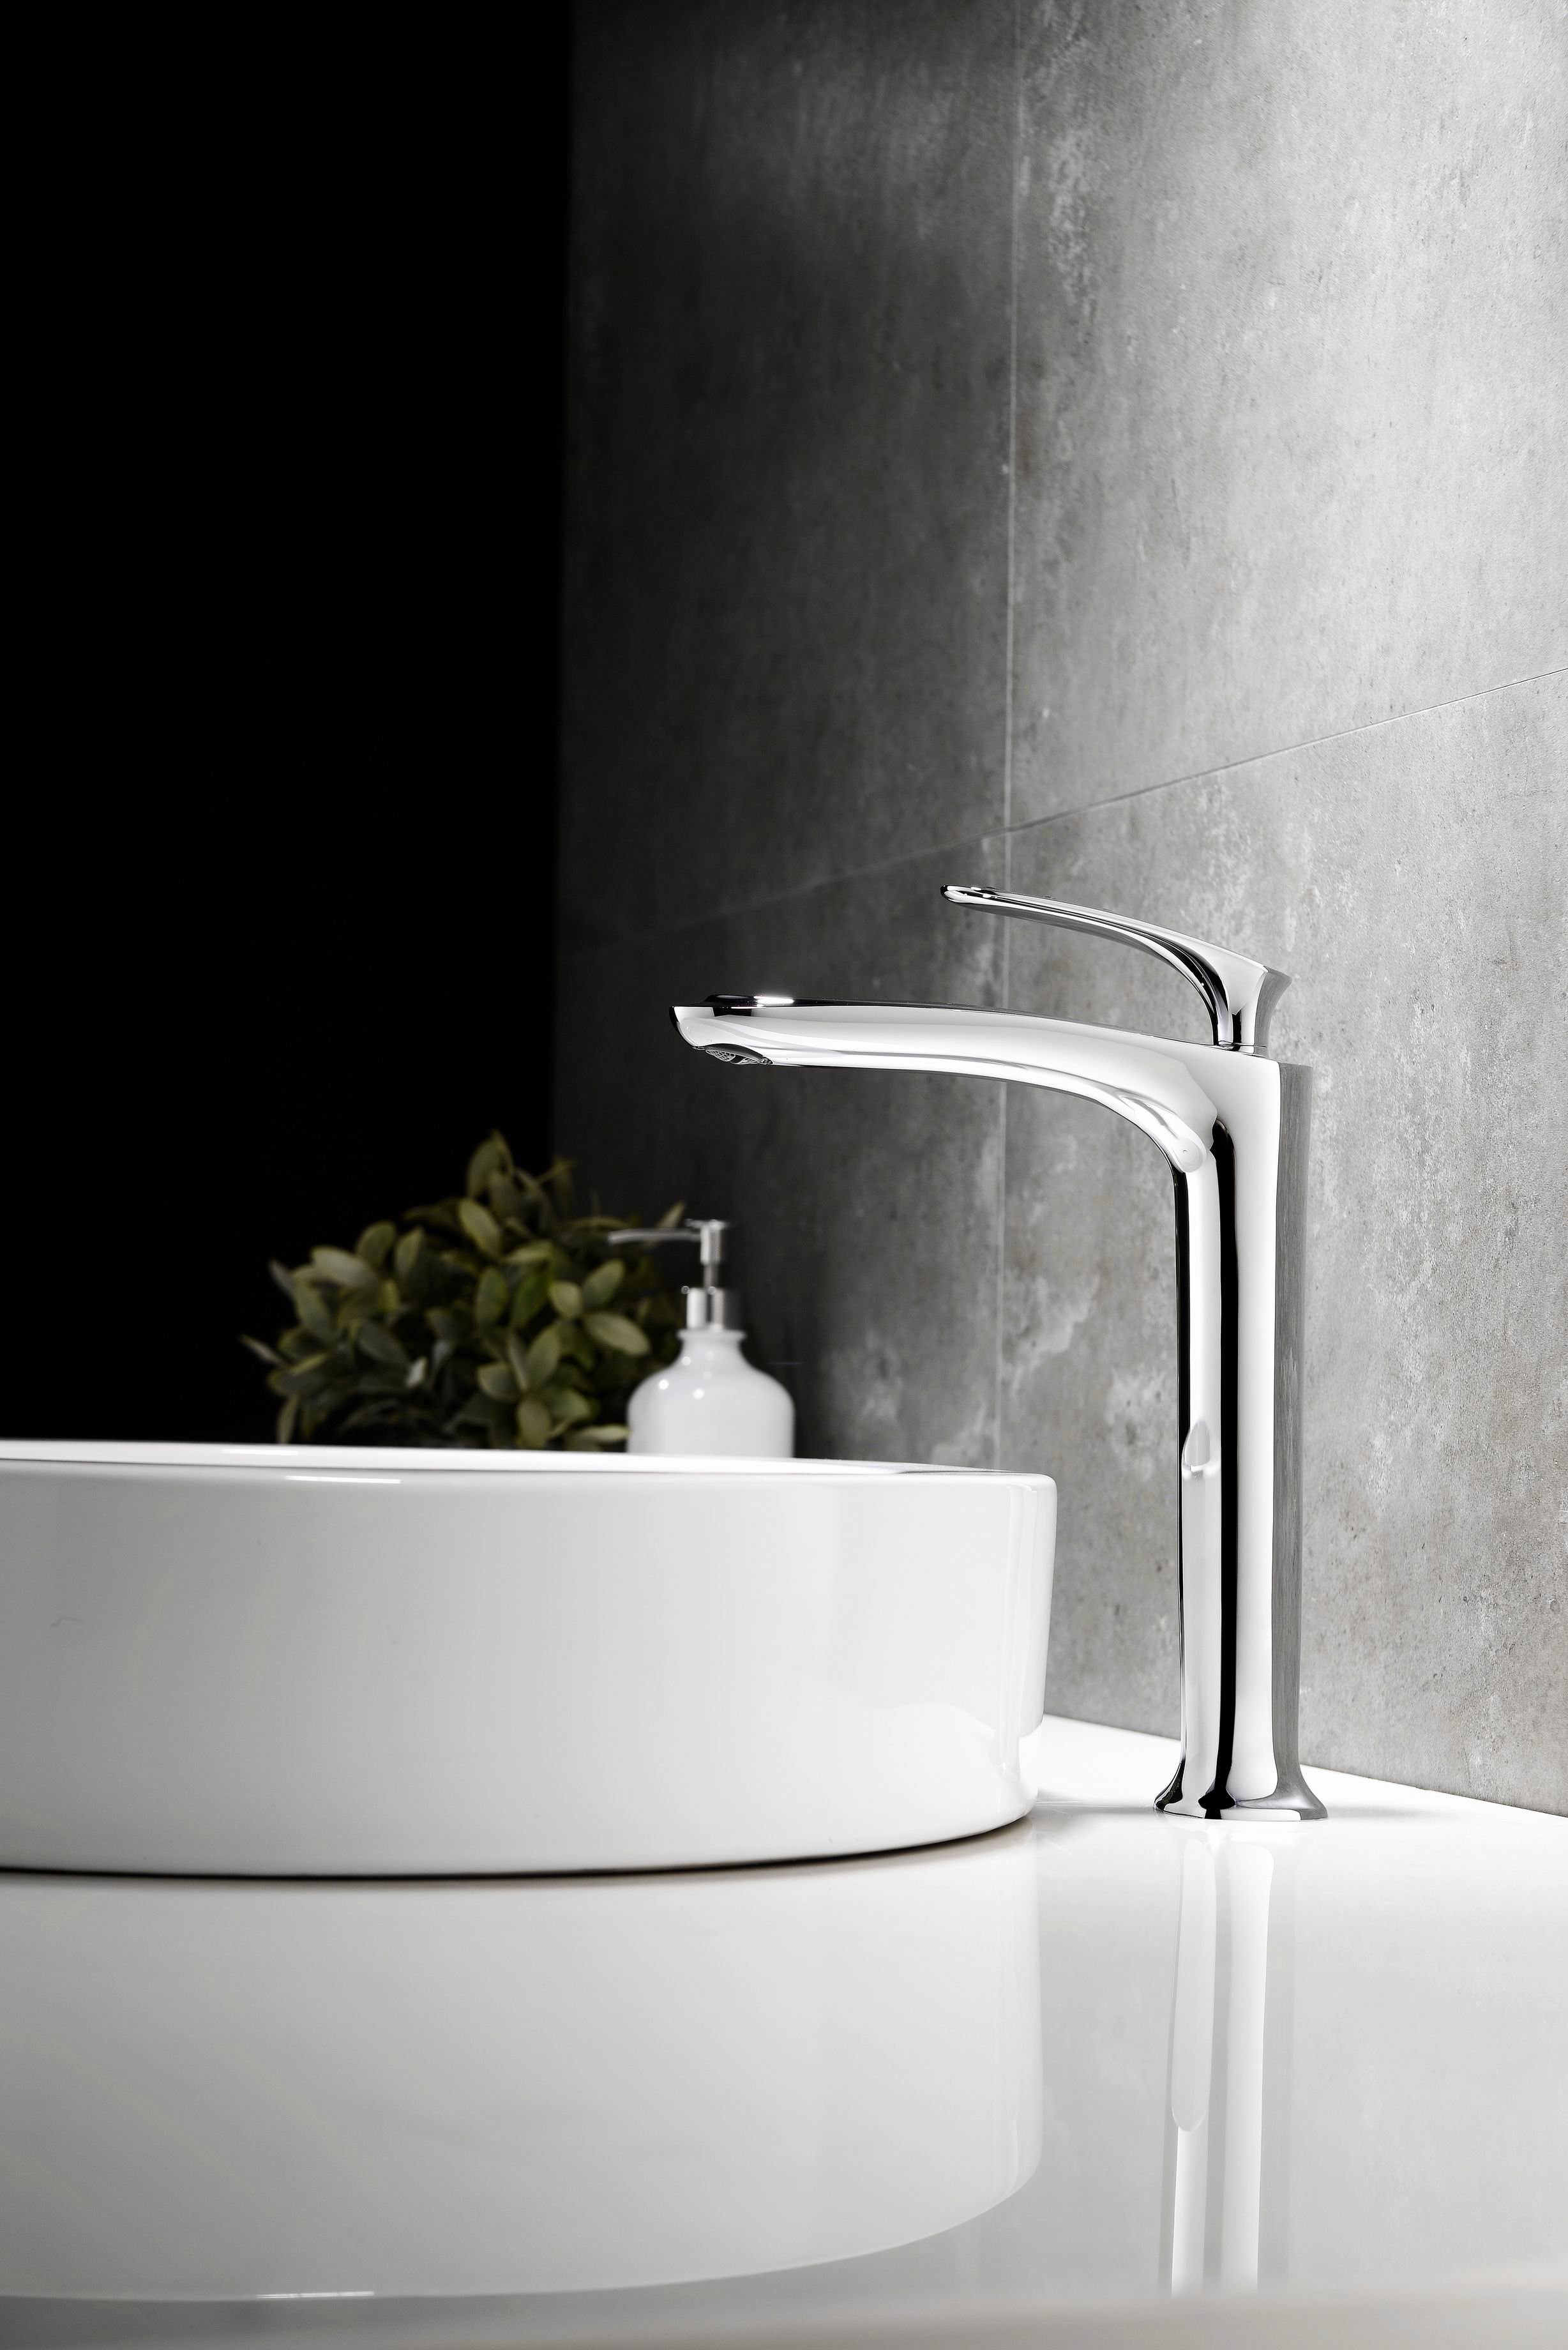 Kaiping Original Design Taps Manufacturer Tall Basin Faucet Brass Bathroom Mixer Taps Robinet Salle De Bain